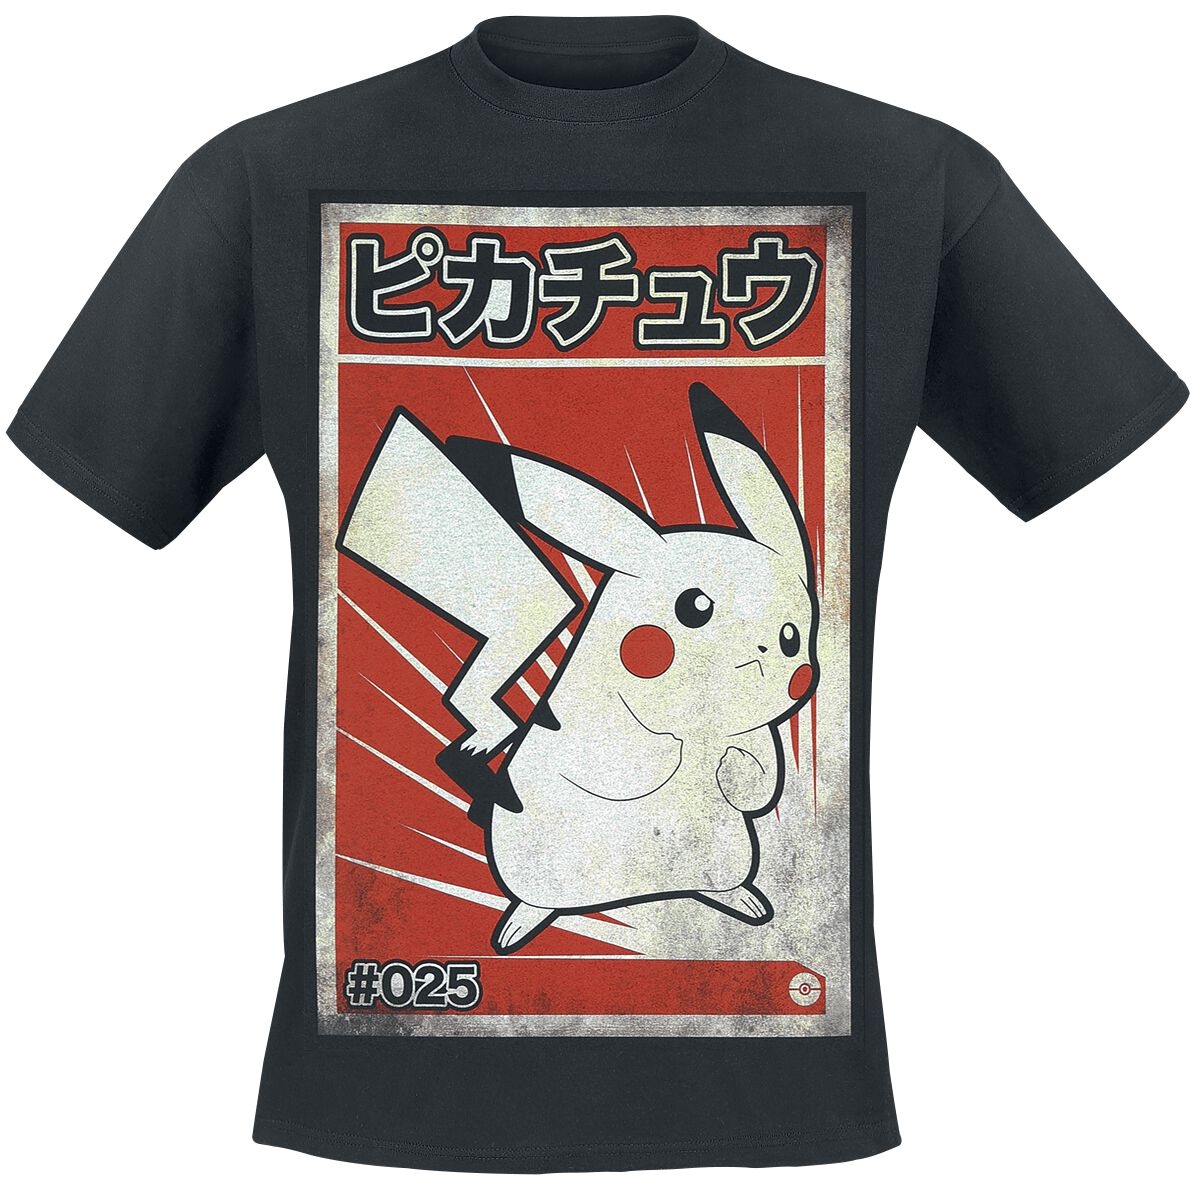 Pokémon Pikachu - Poster T-Shirt schwarz in XXL von Pokémon